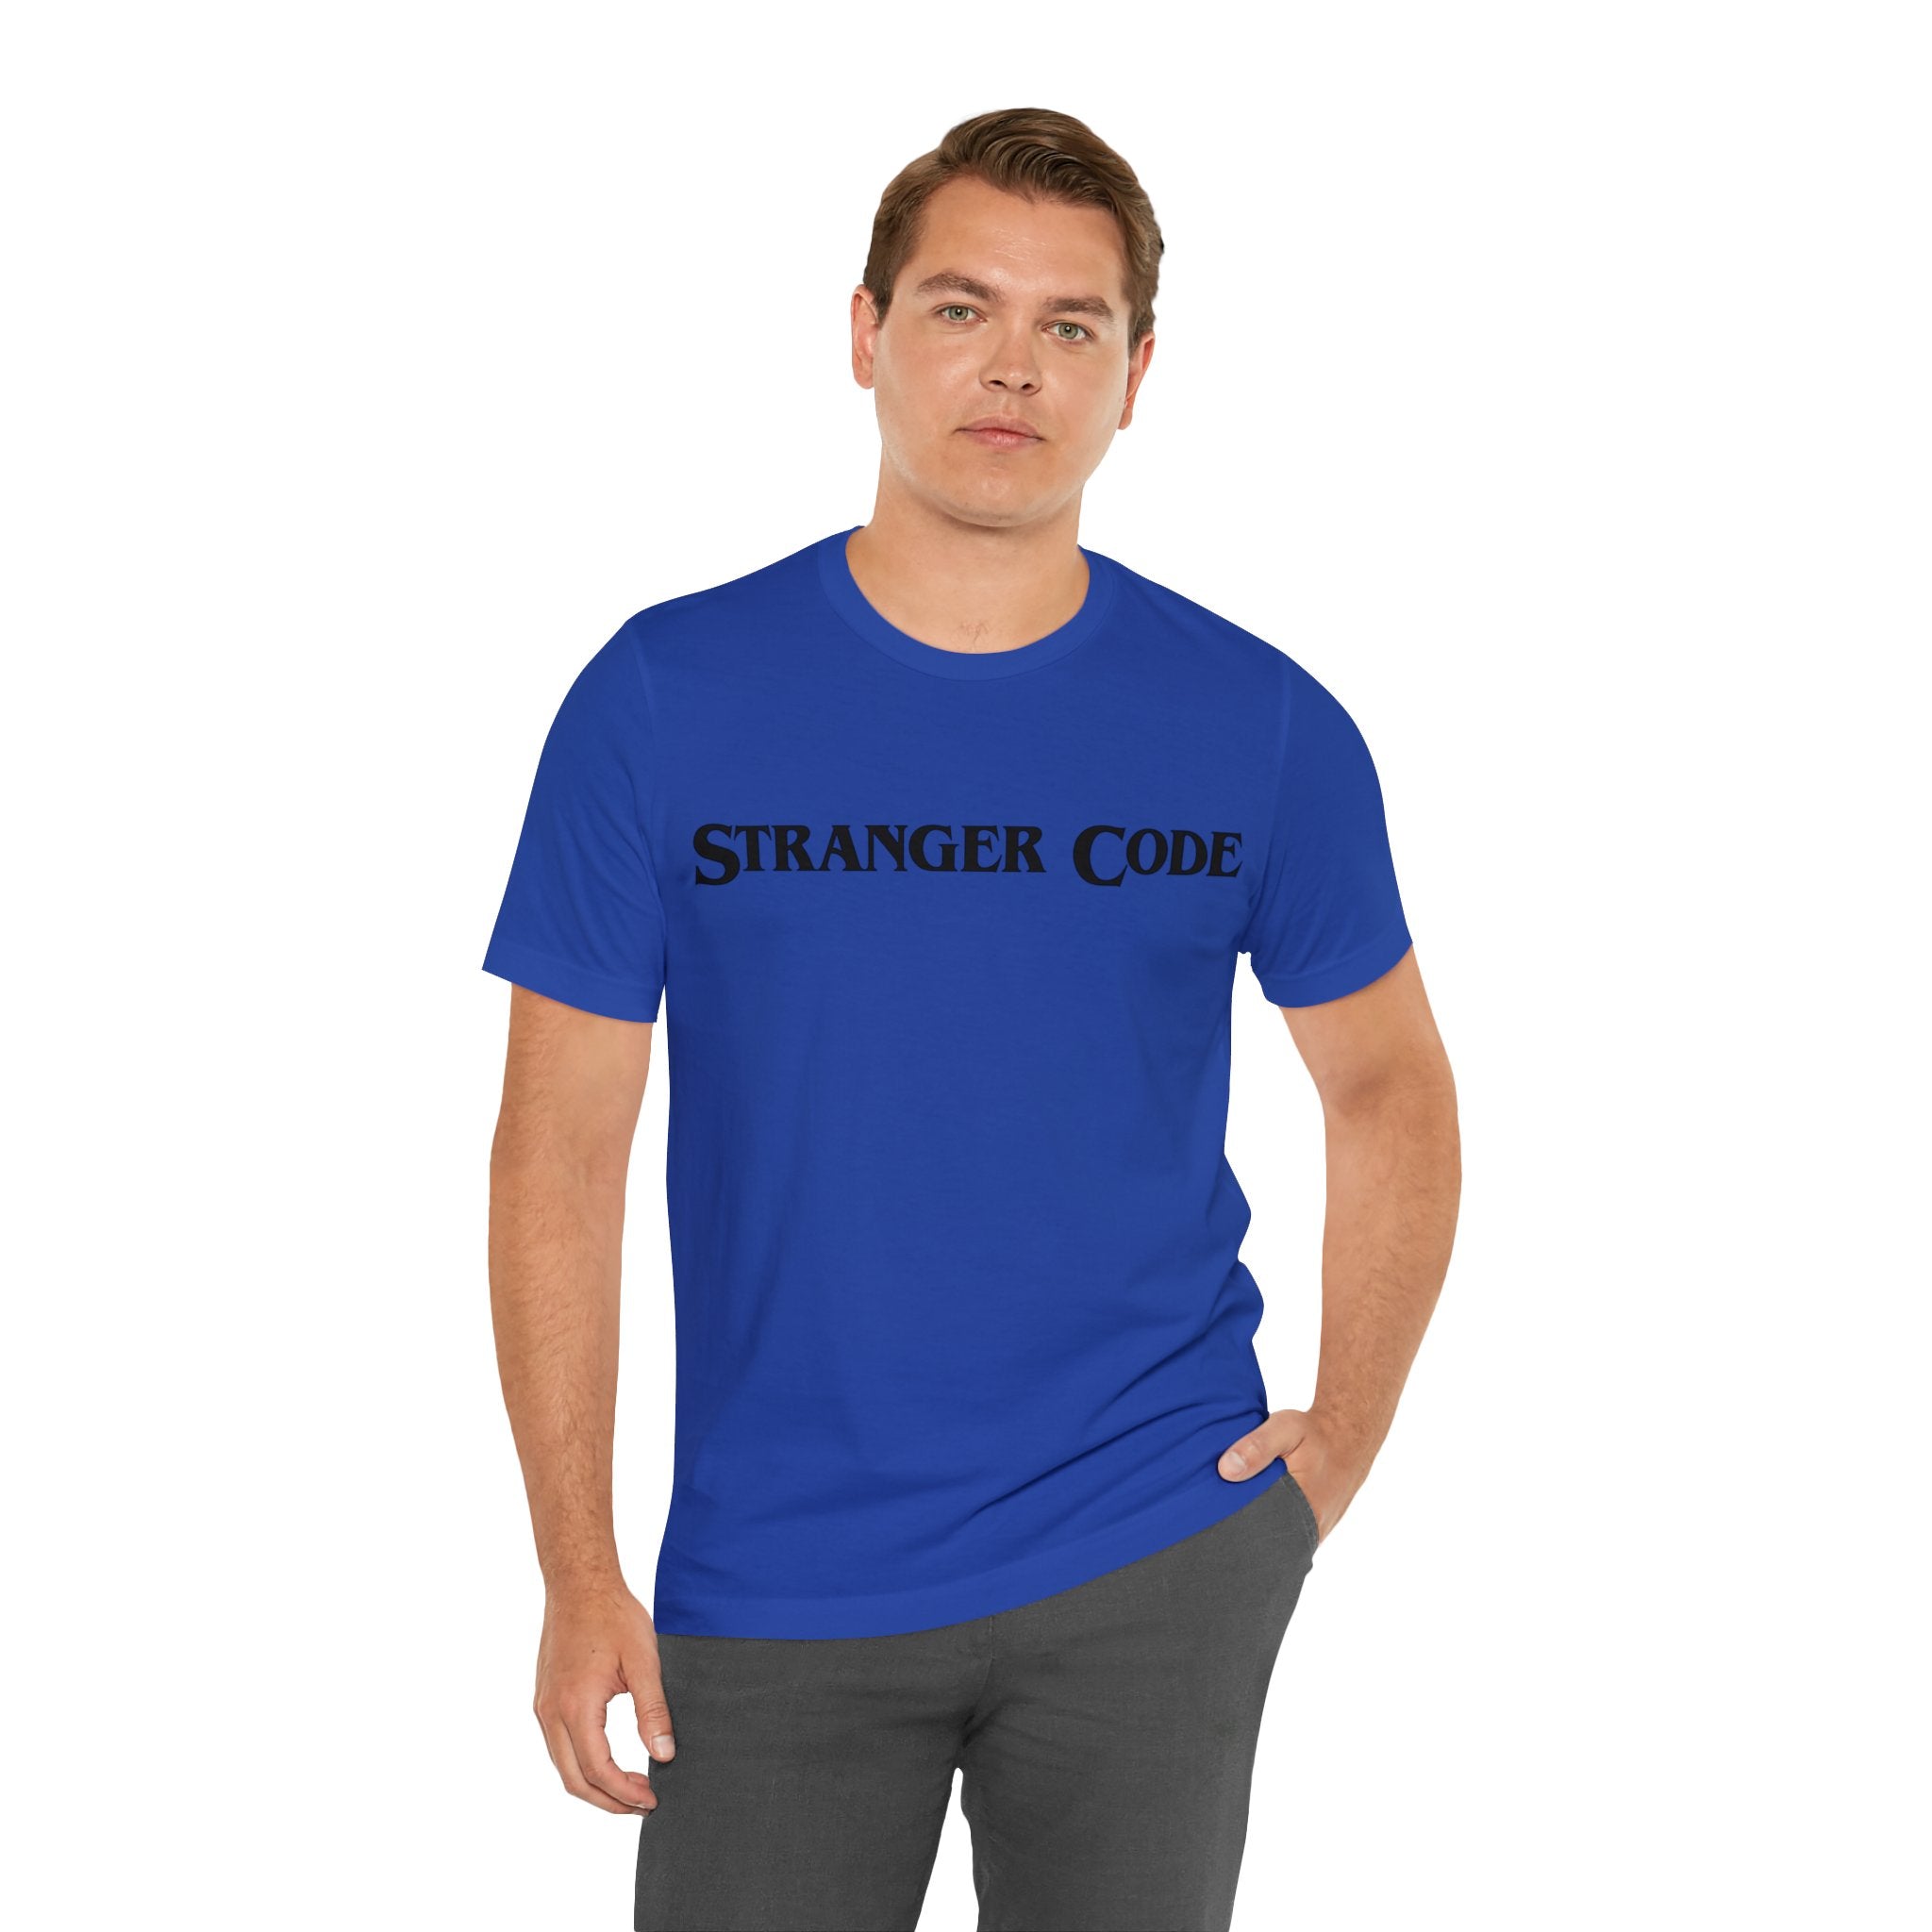 Stranger Code Tee Shirt